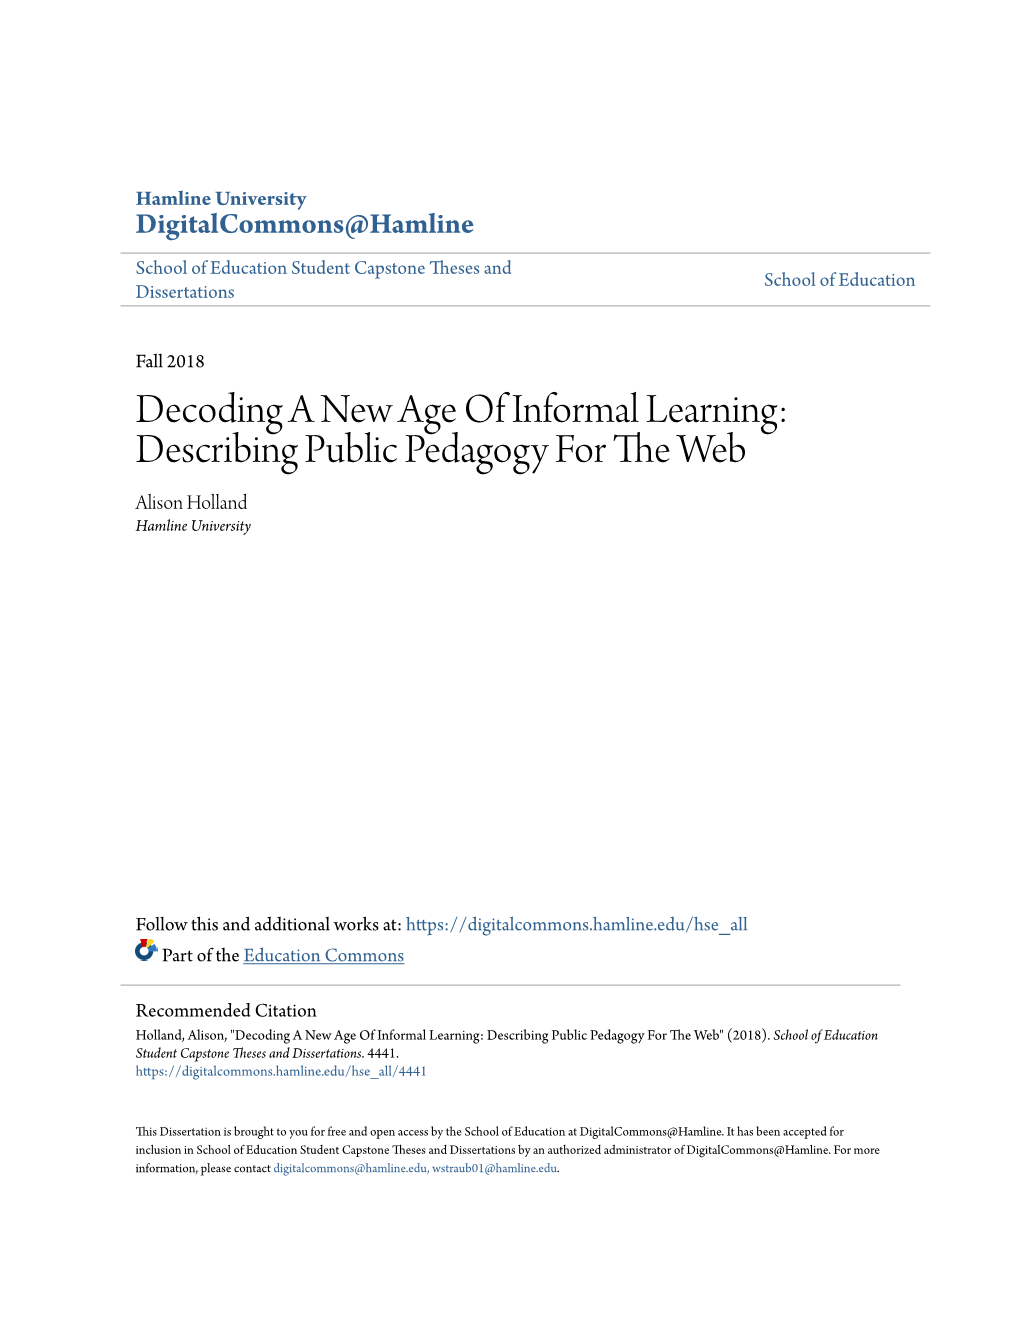 Decoding a New Age of Informal Learning: Describing Public Pedagogy for the Ew B Alison Holland Hamline University